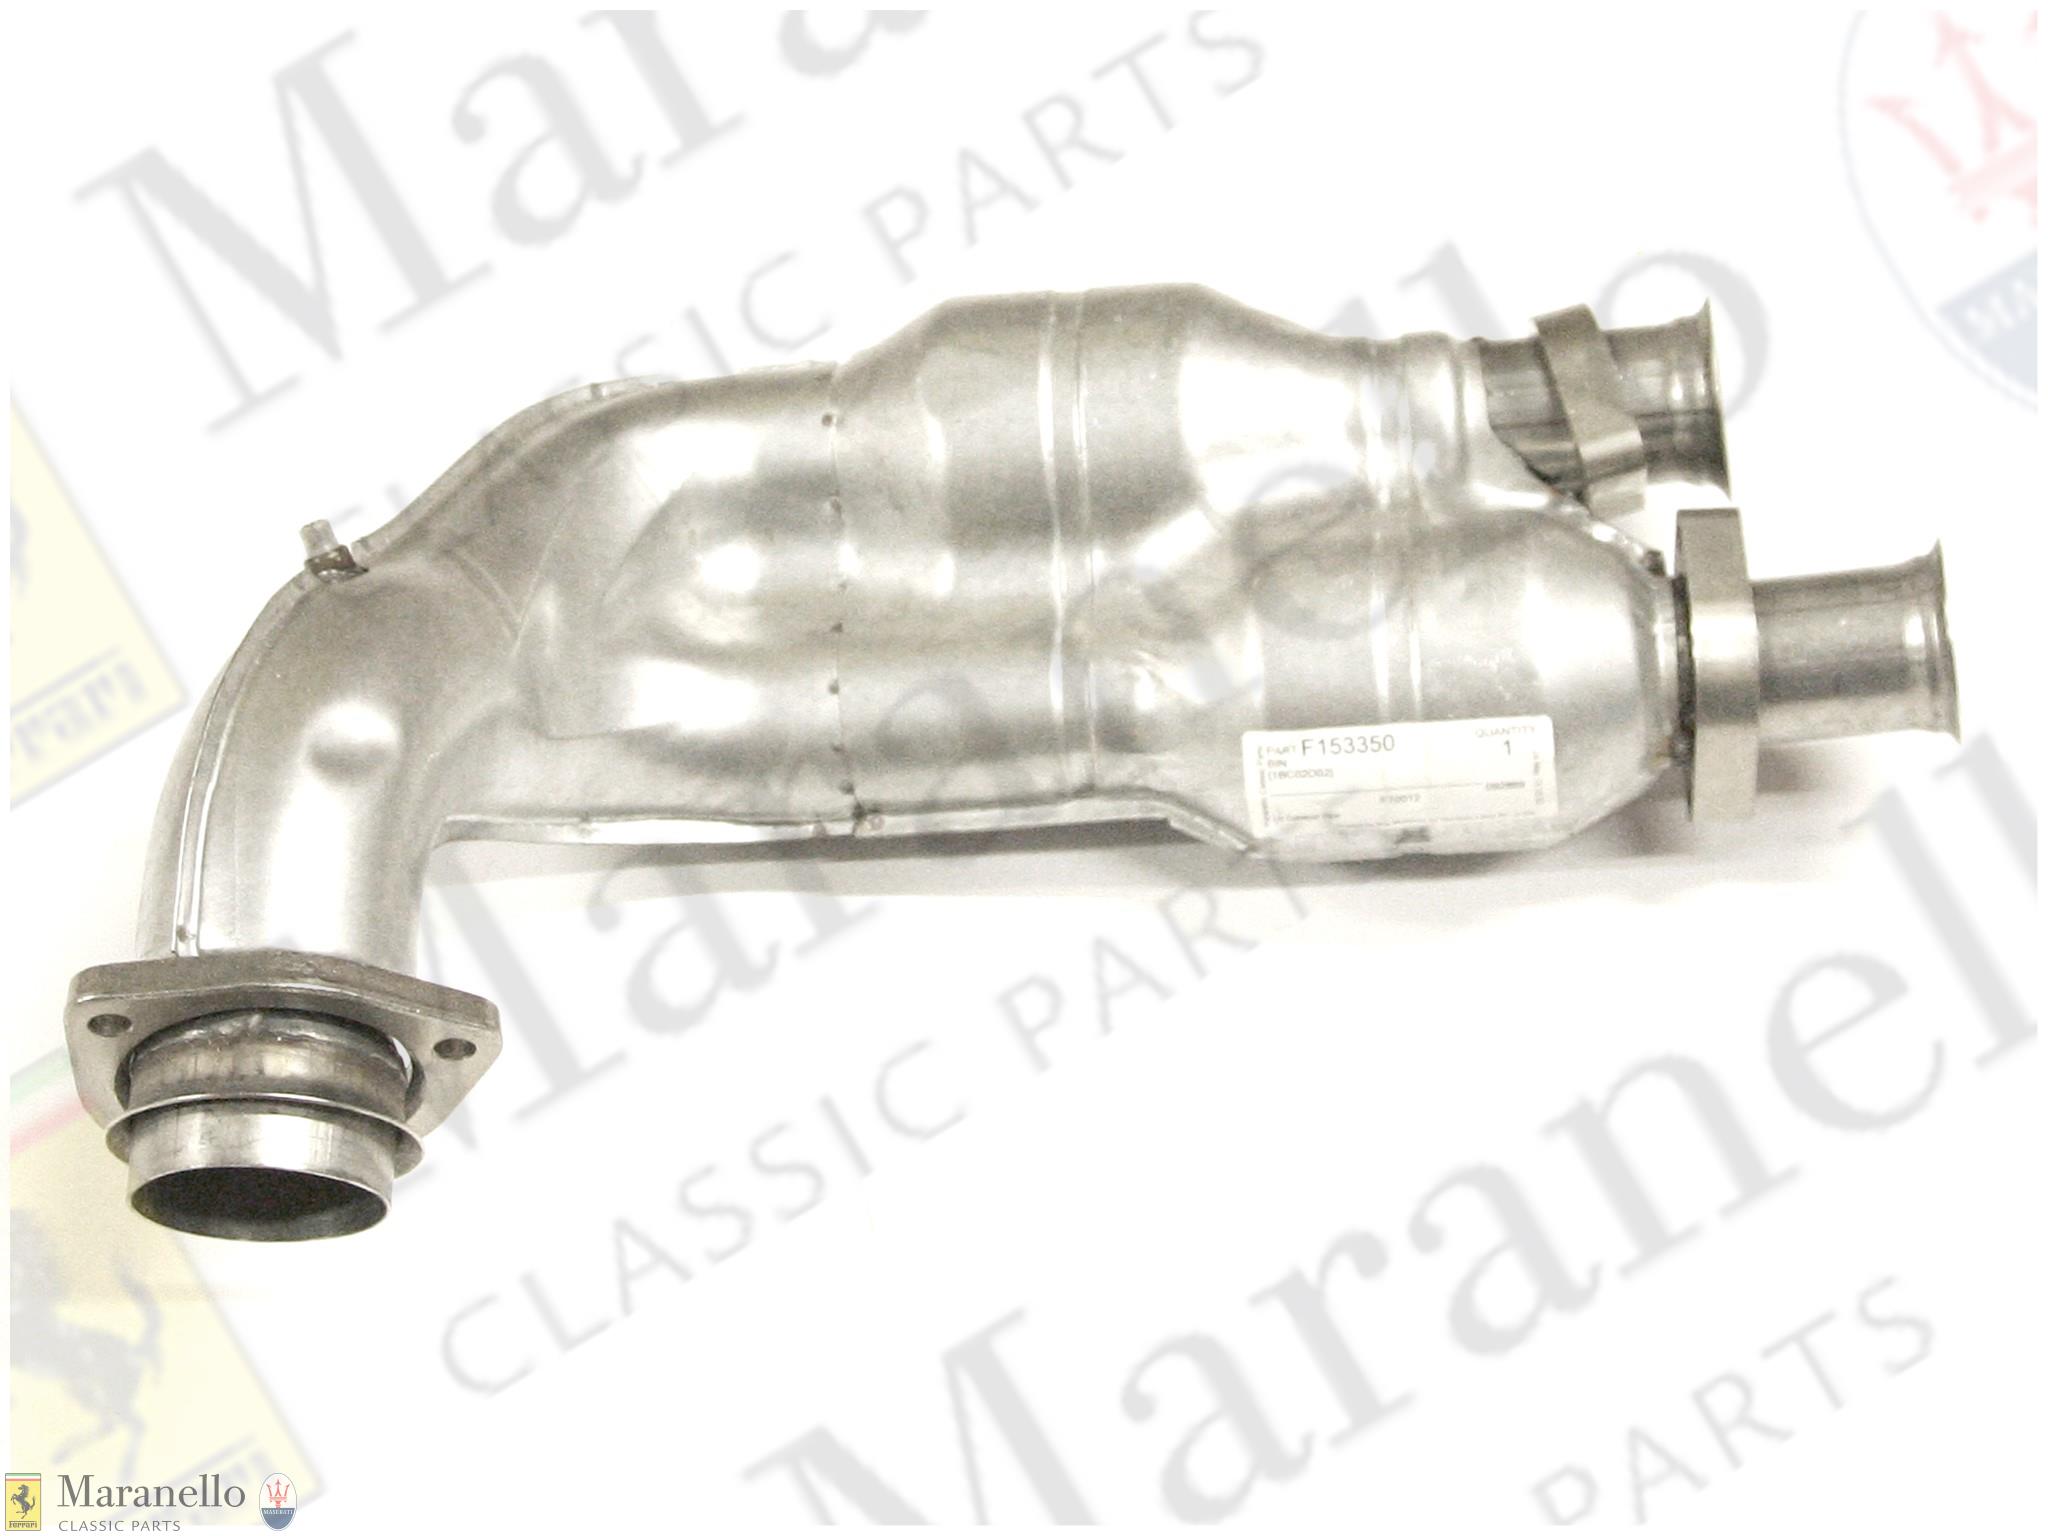 ferrari-part-153350-lh-light-off-catalyst-maranello-classic-parts